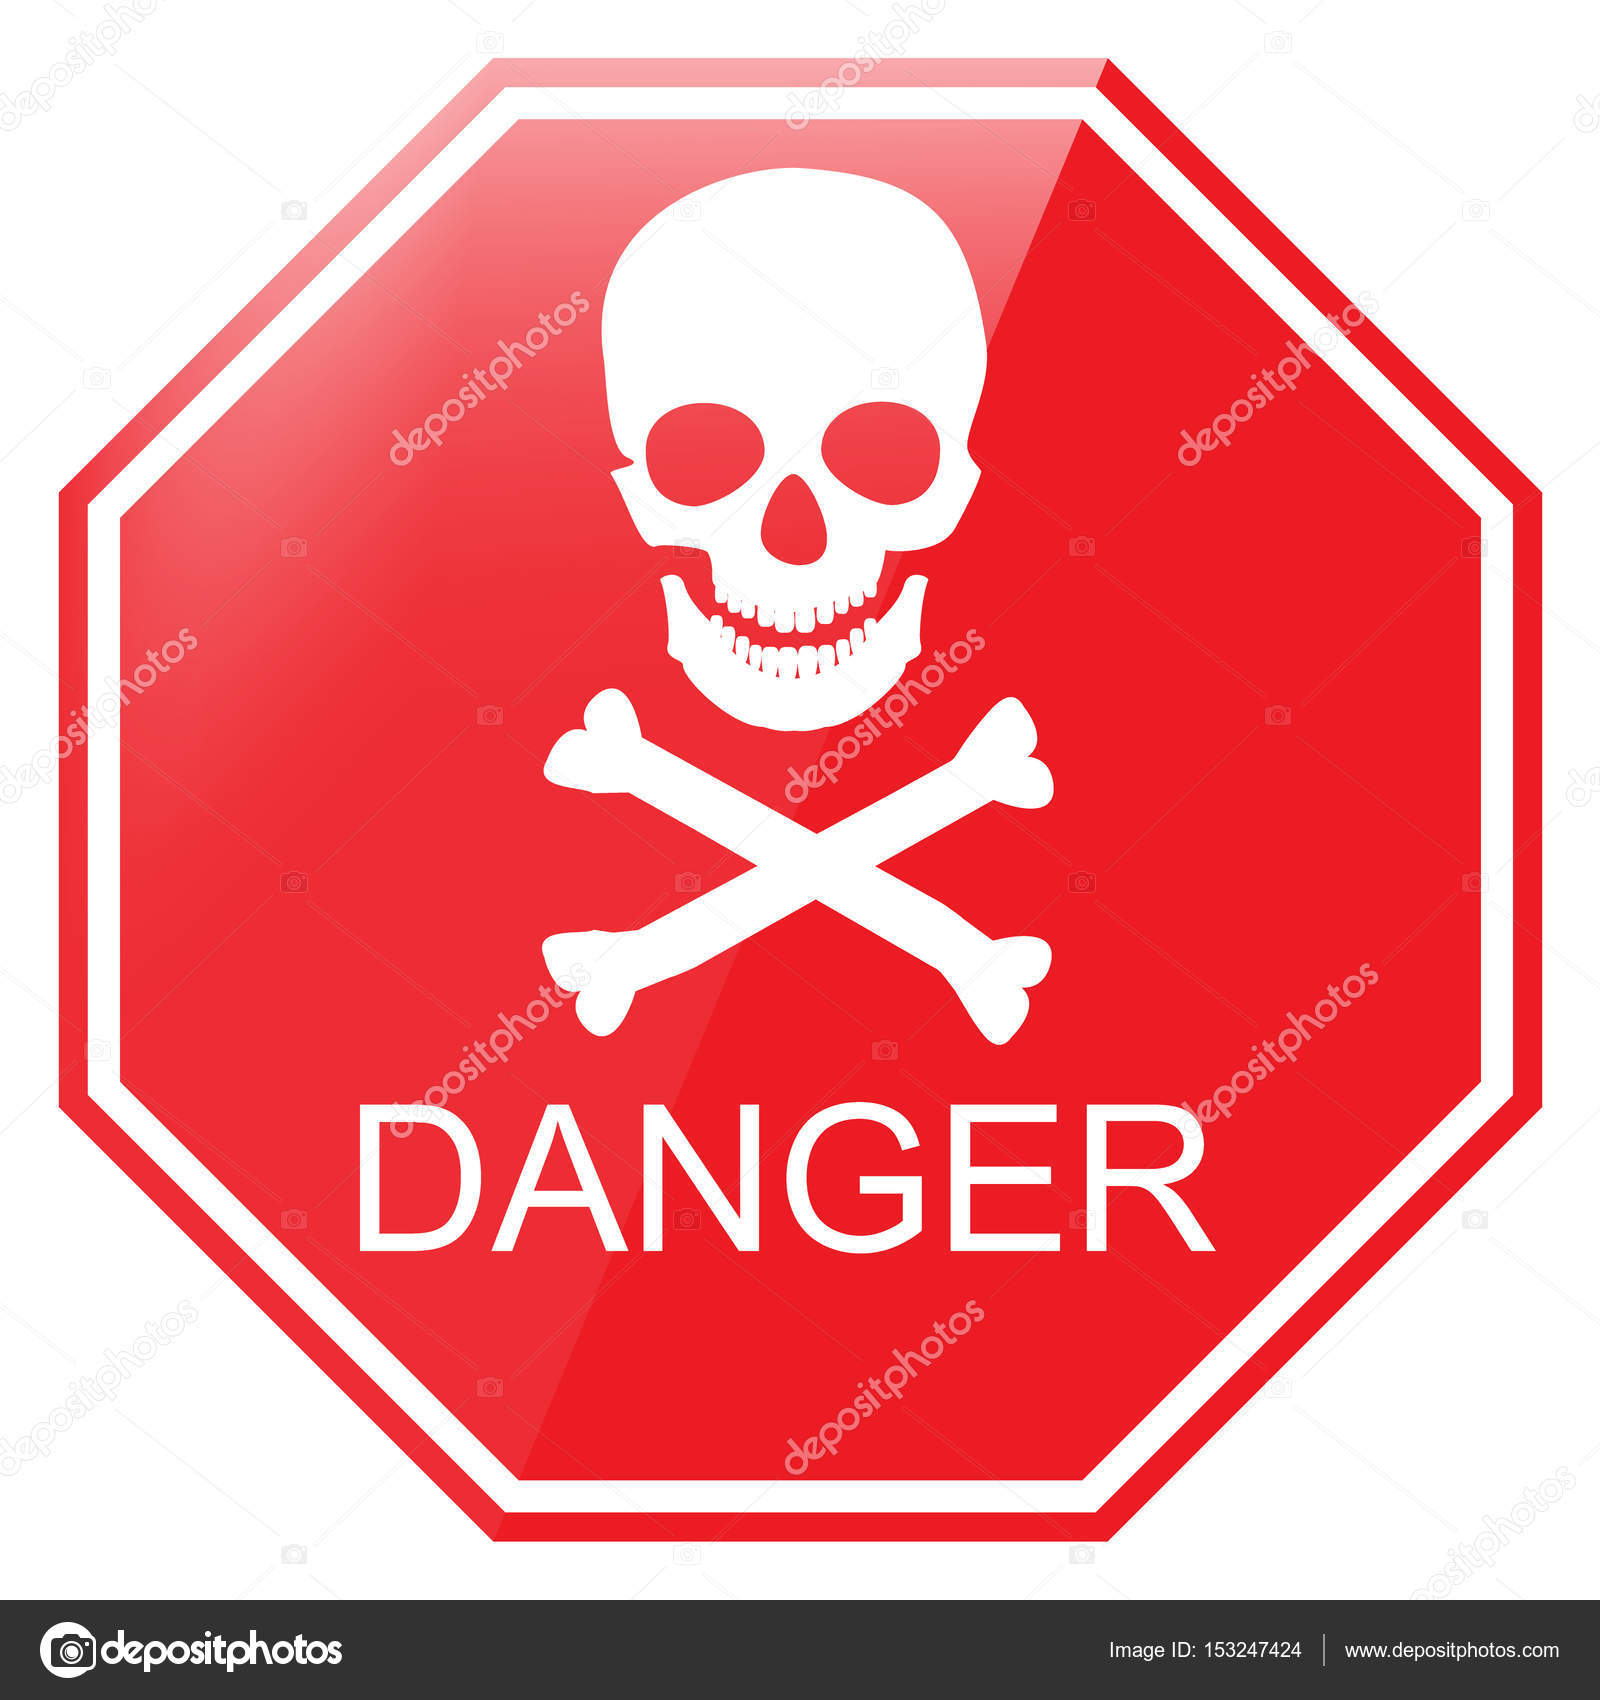 Warning, danger sign — Stock Photo © viktorijareut #153247424